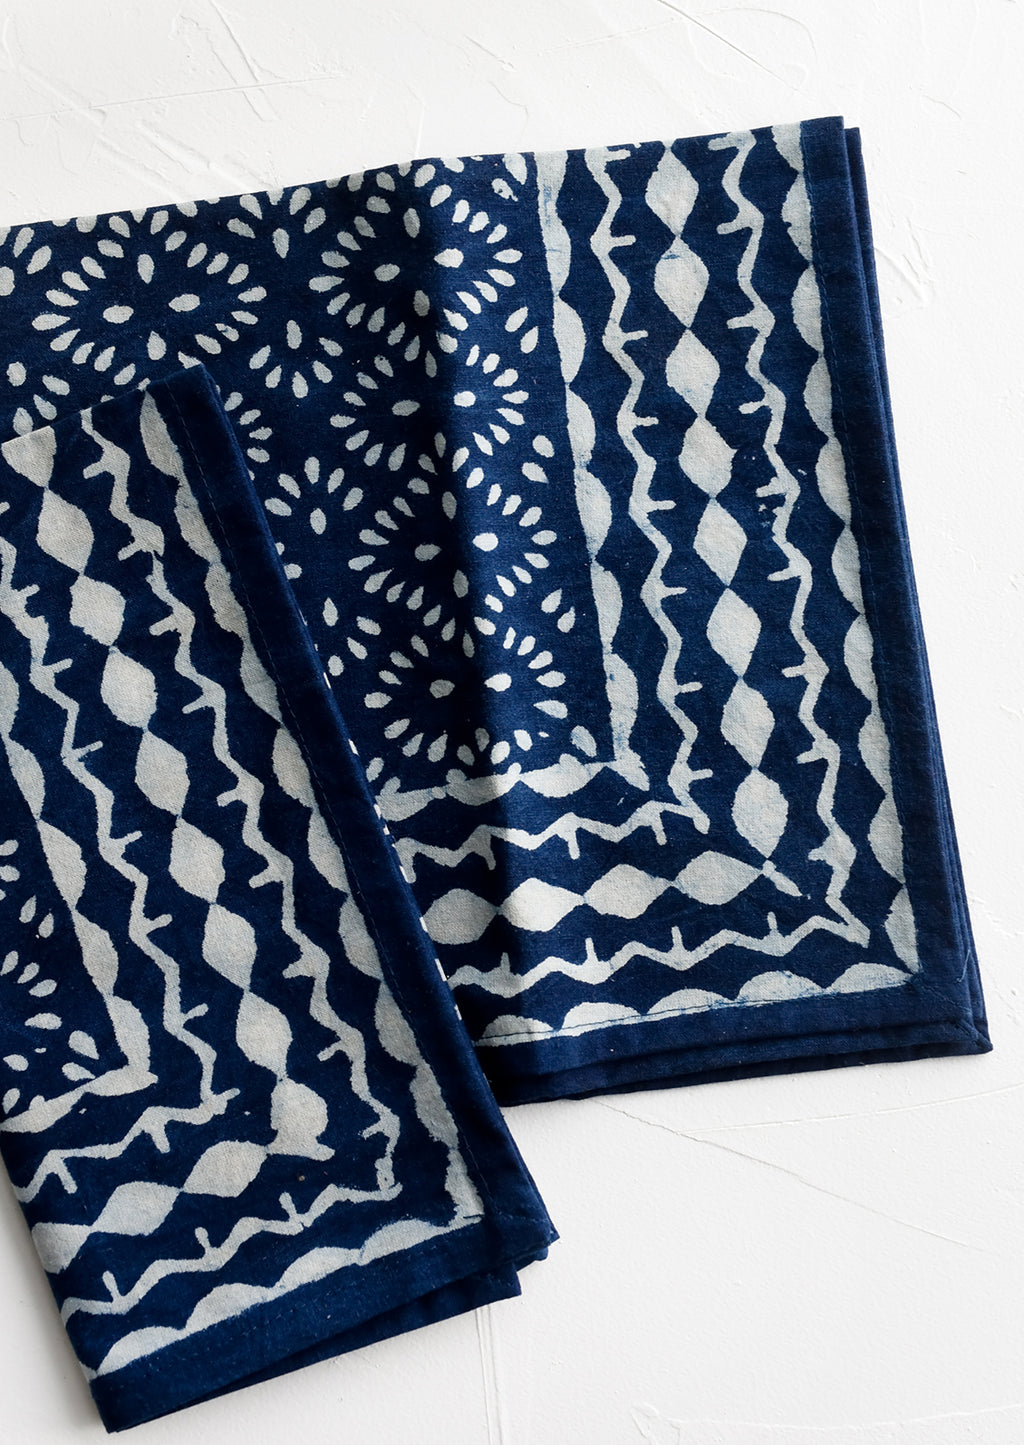 2: A pair of indigo napkins with white block printed pattern.